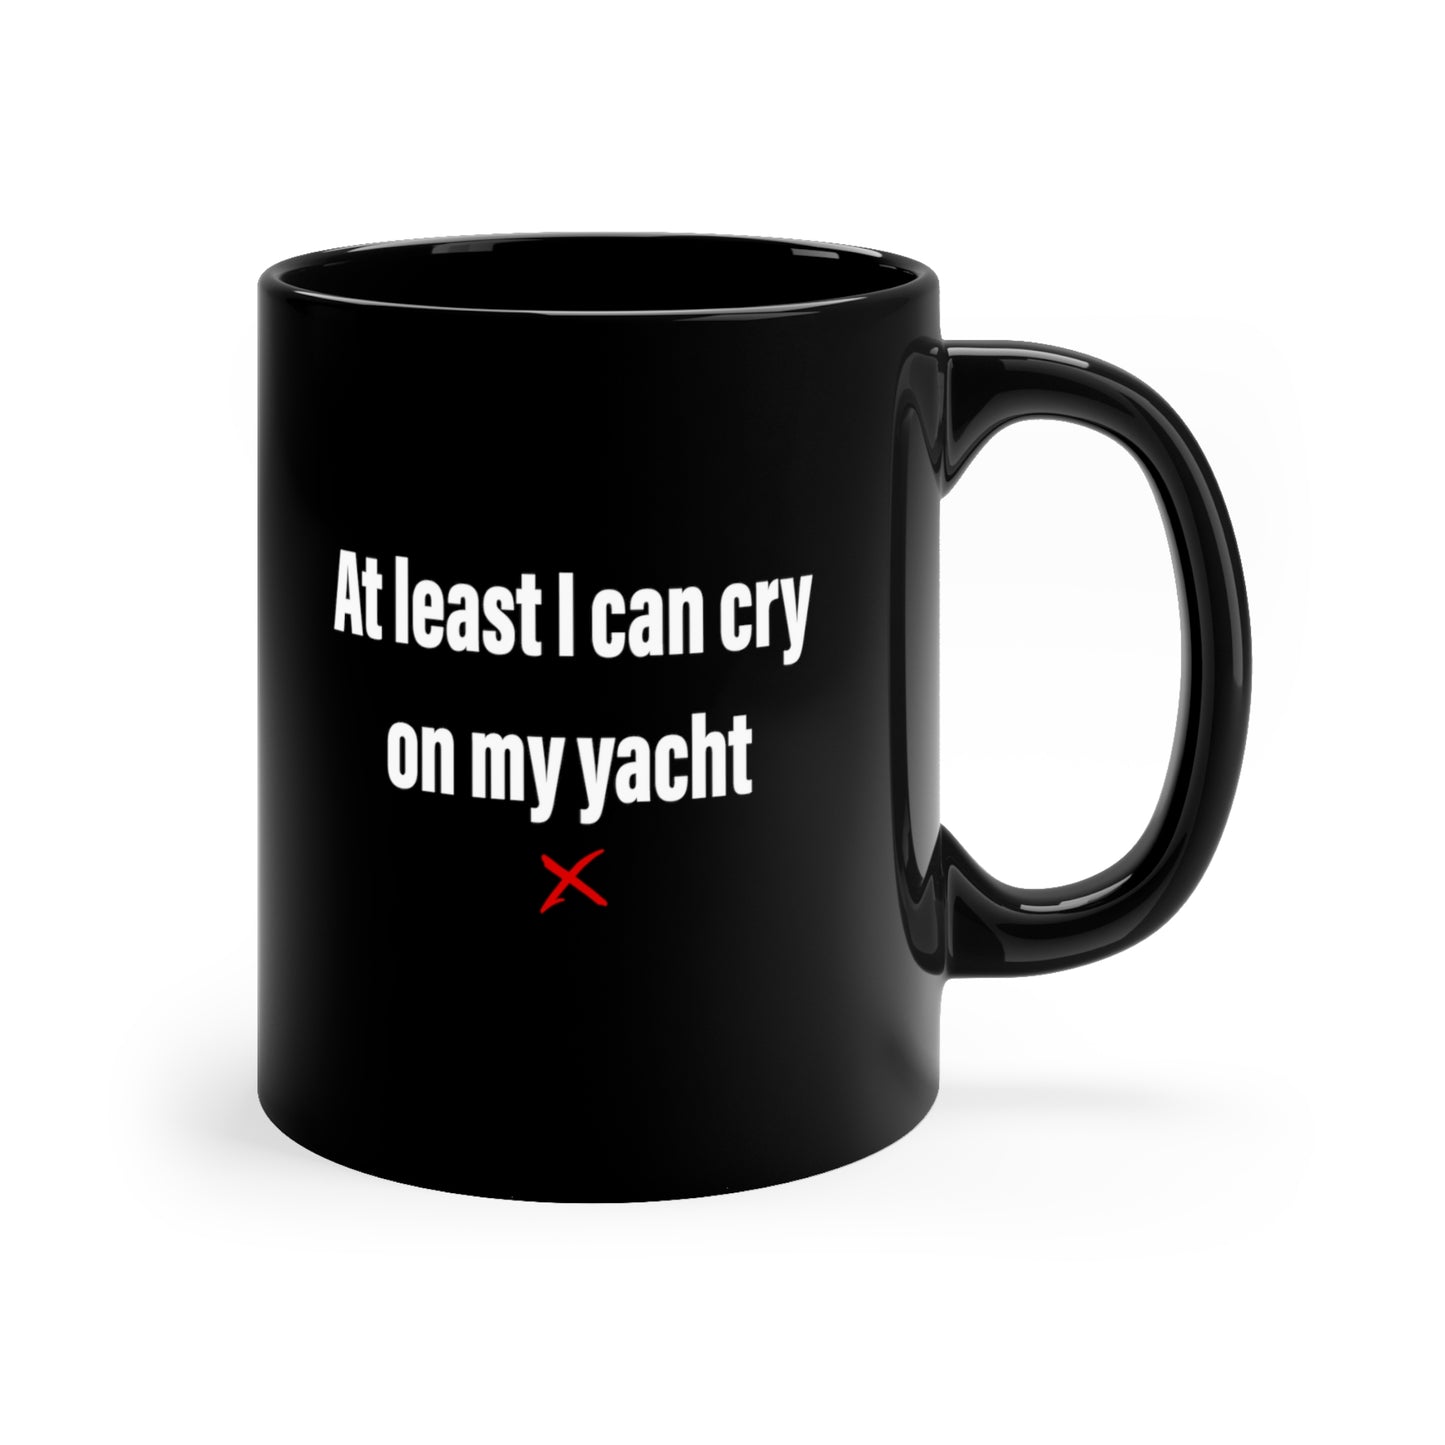 At least I can cry on my yacht - Mug